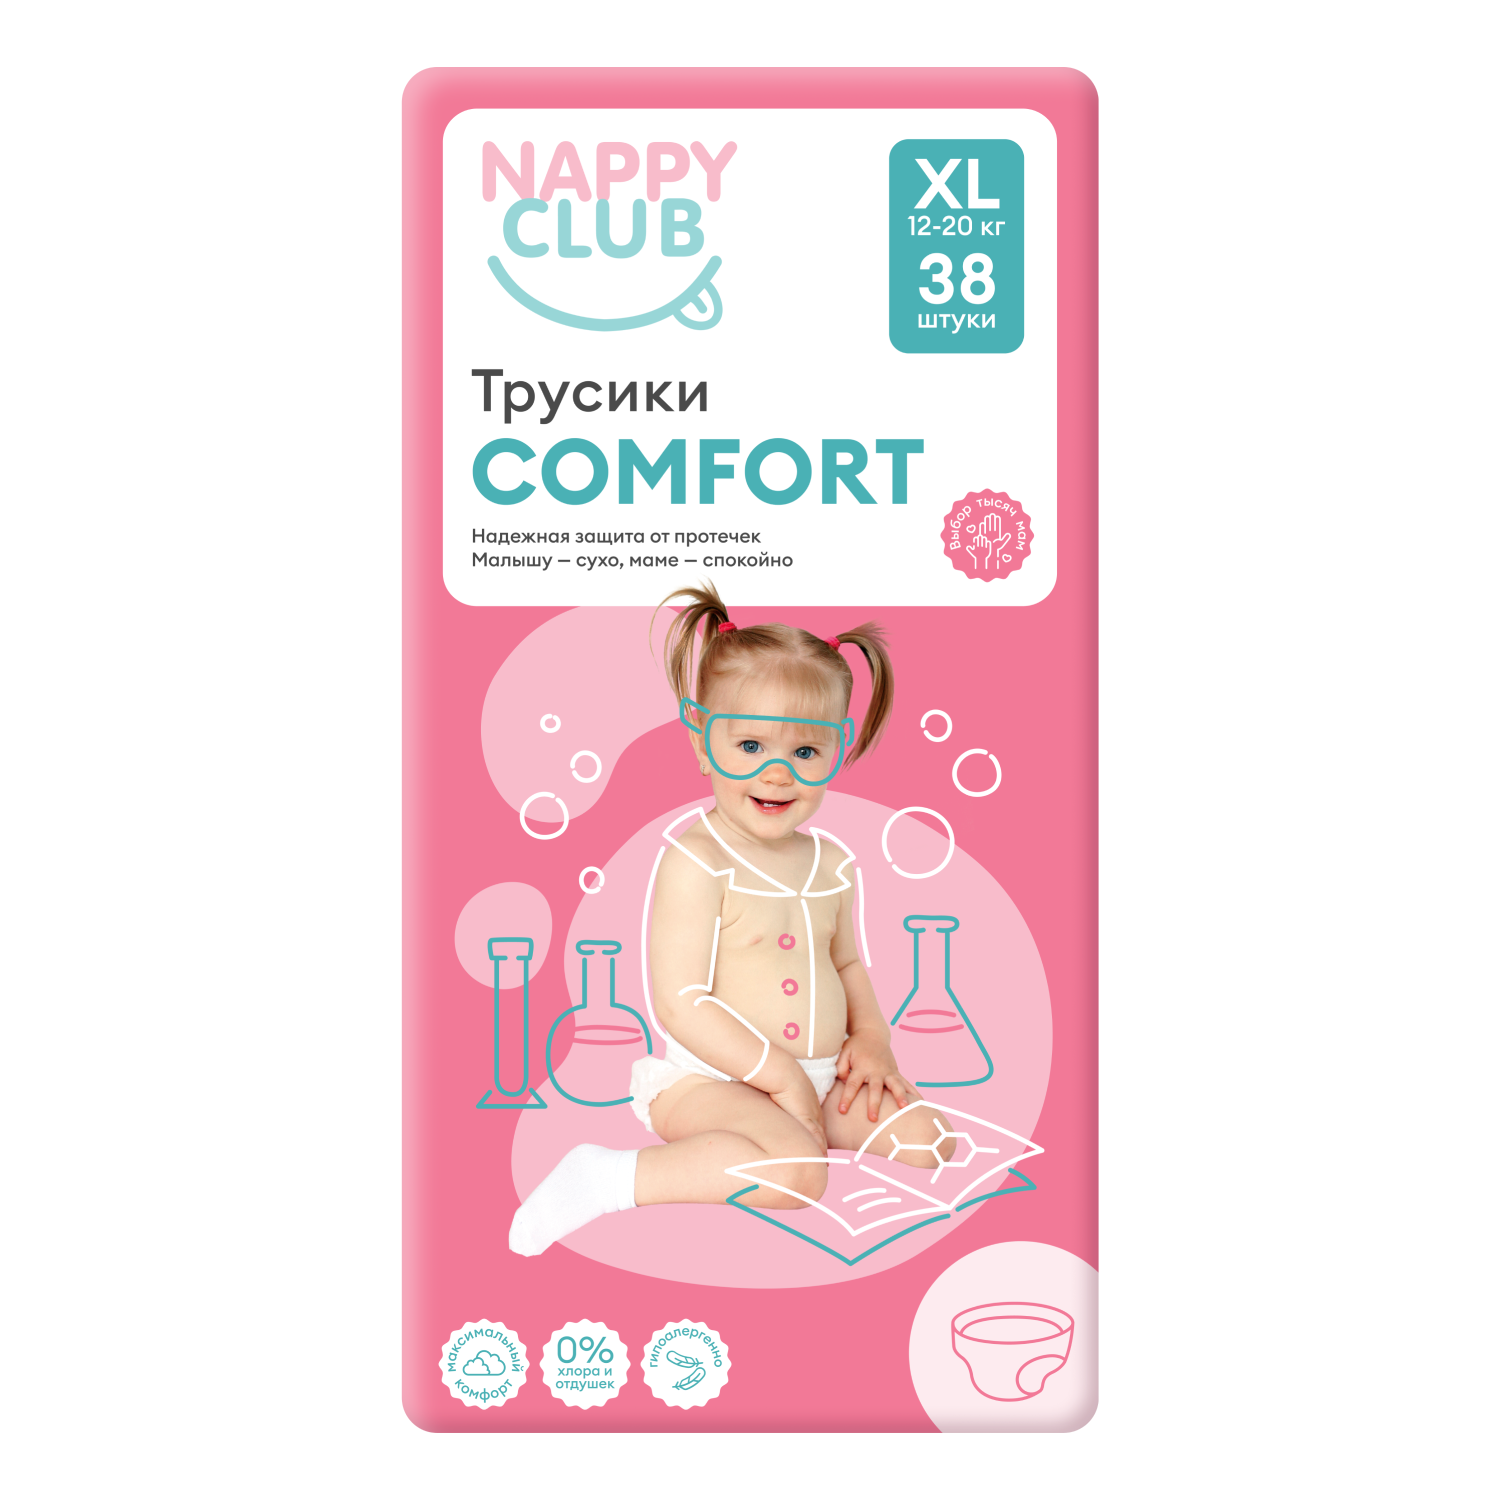 NappyClub трусики Comfort XL (12-20 кг) 38 шт.